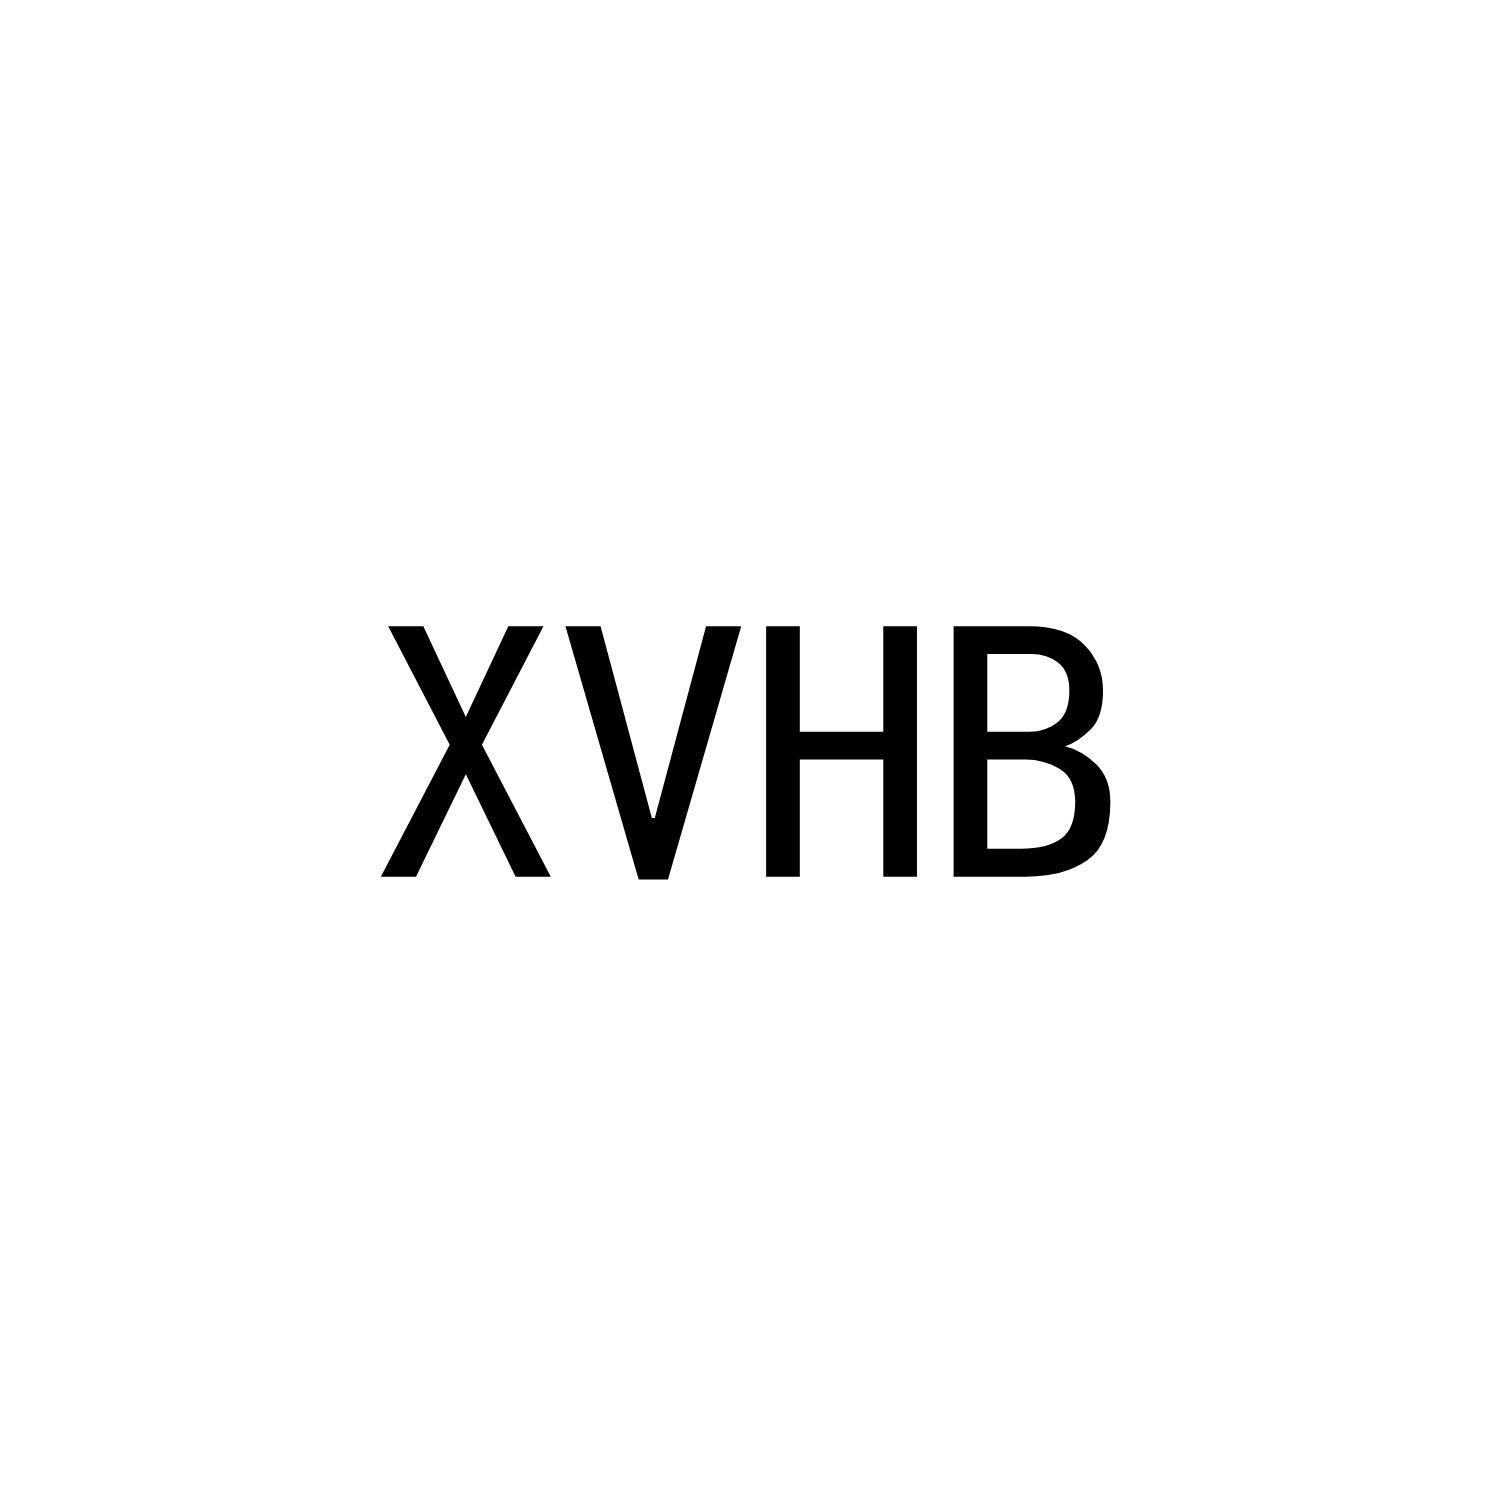 XVHB